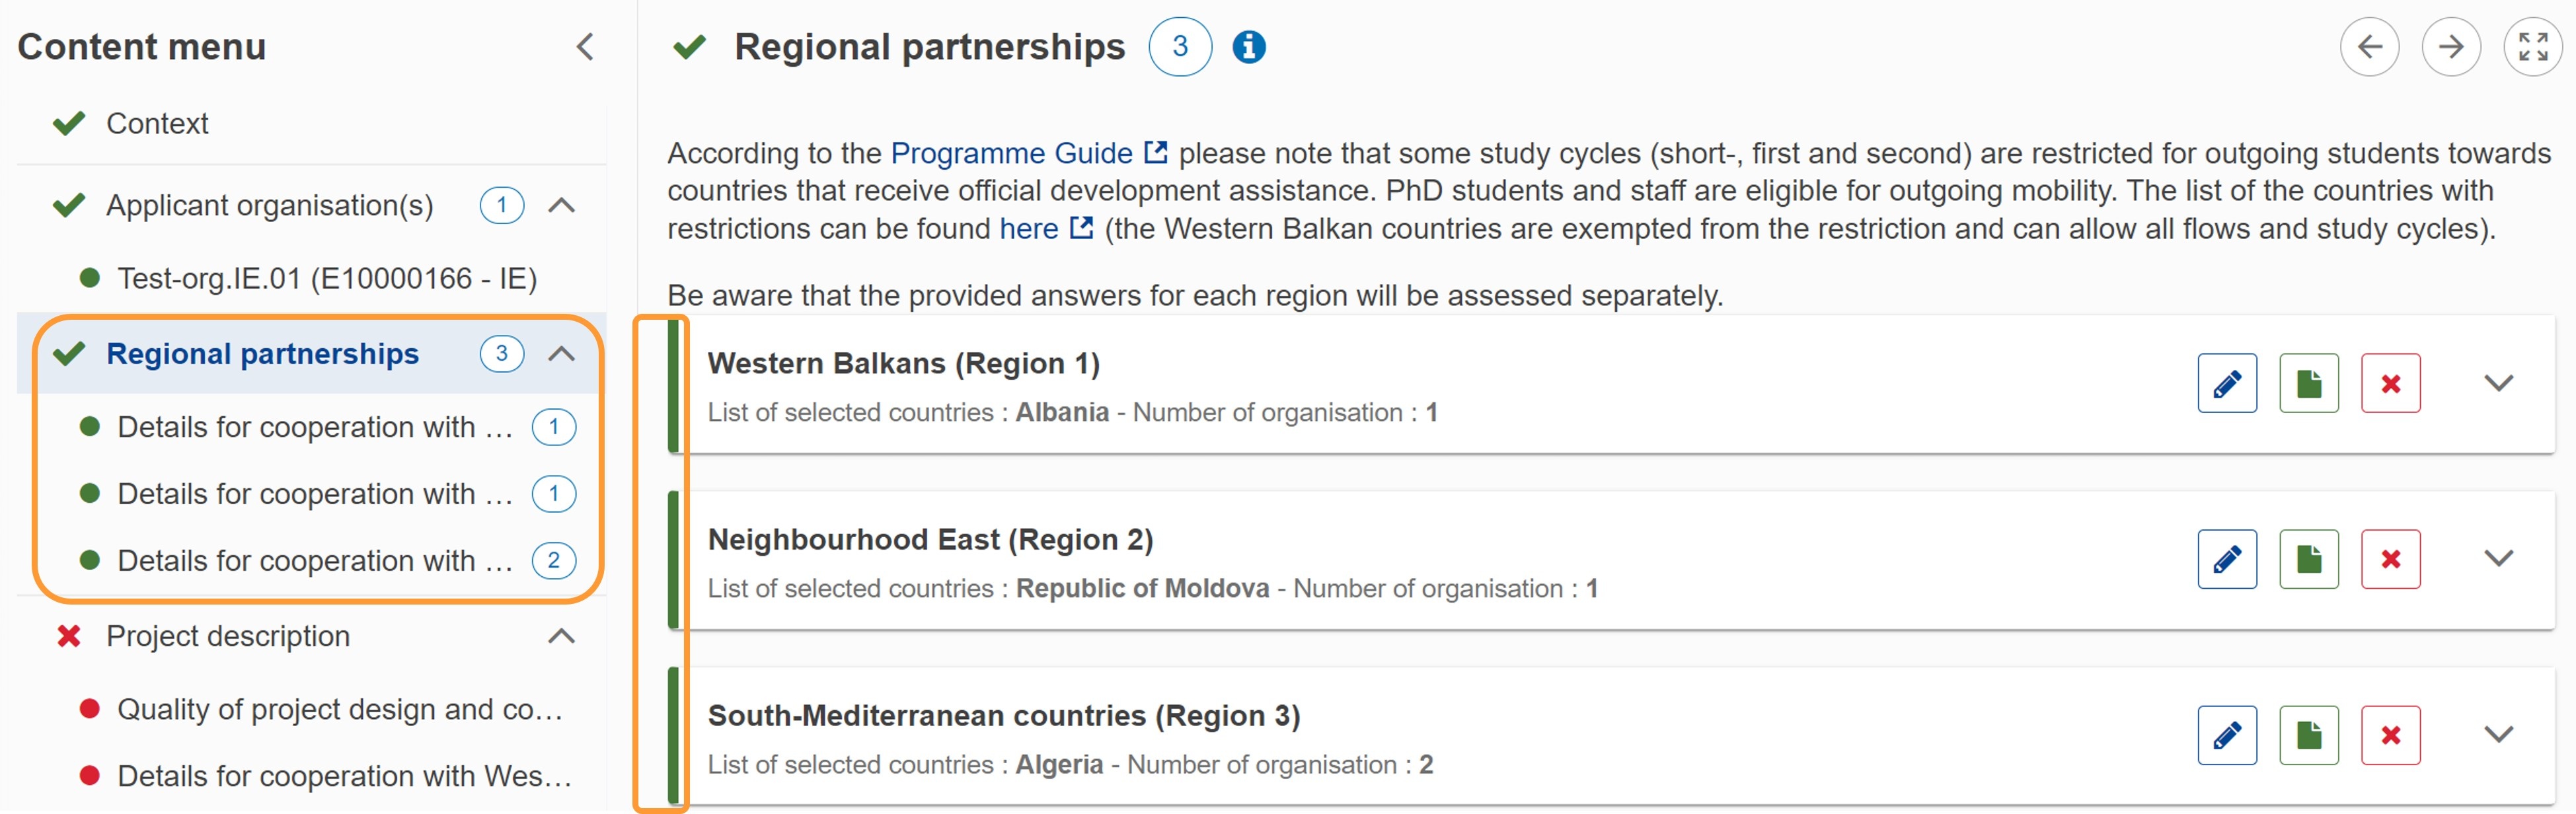 Regional Partnership overview